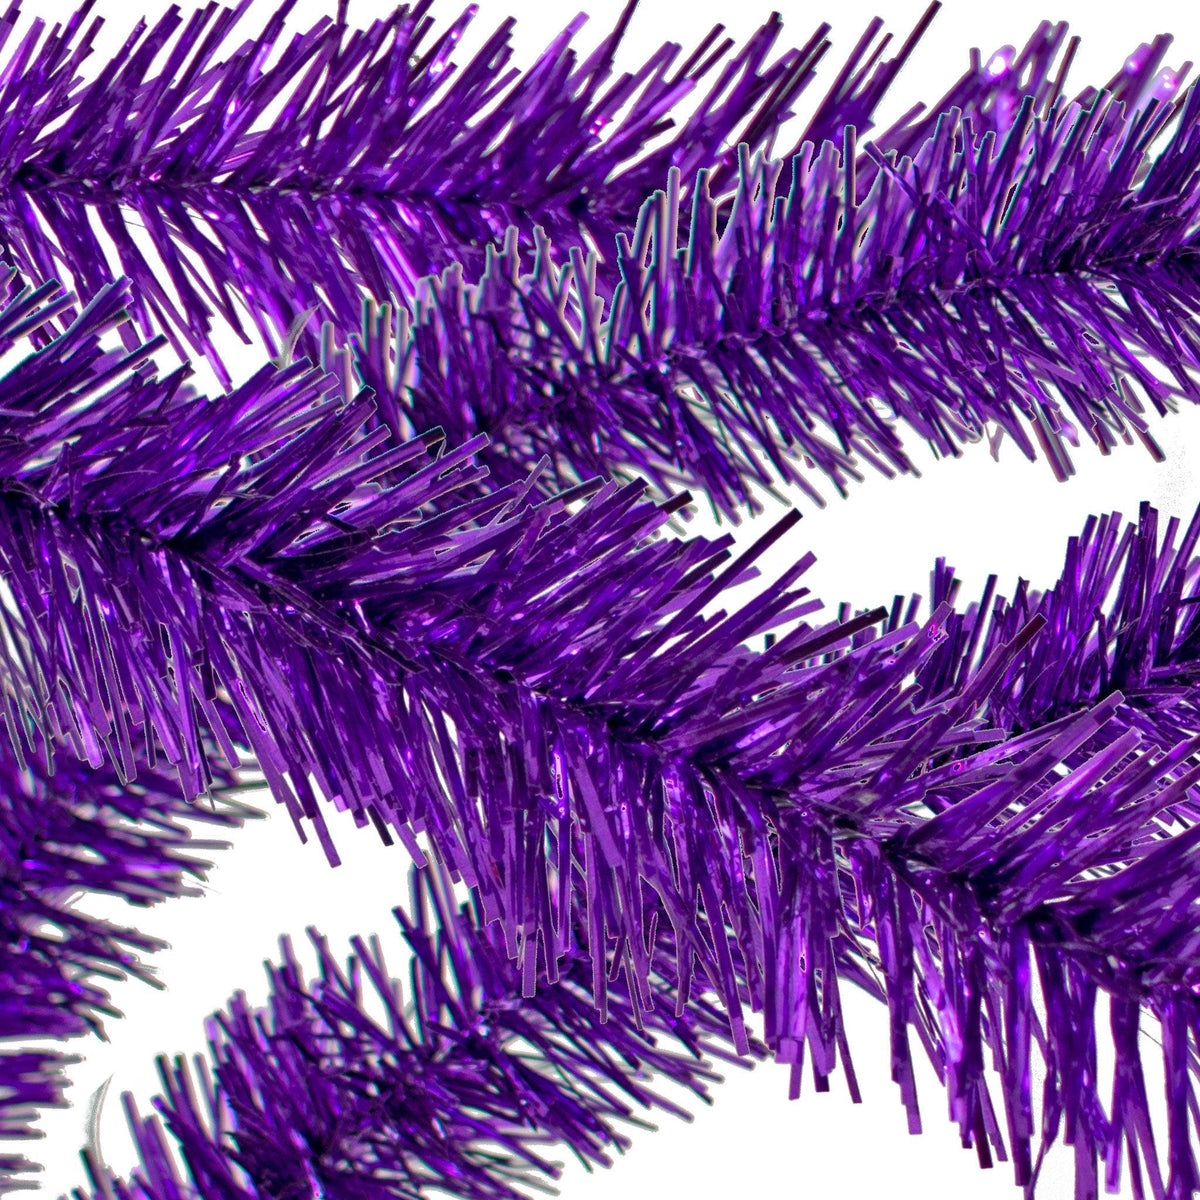 Lee Display's brand new 25ft Shiny Metallic Purple Tinsel Garlands and Fringe Embellishments on sale now at leedisplay.com